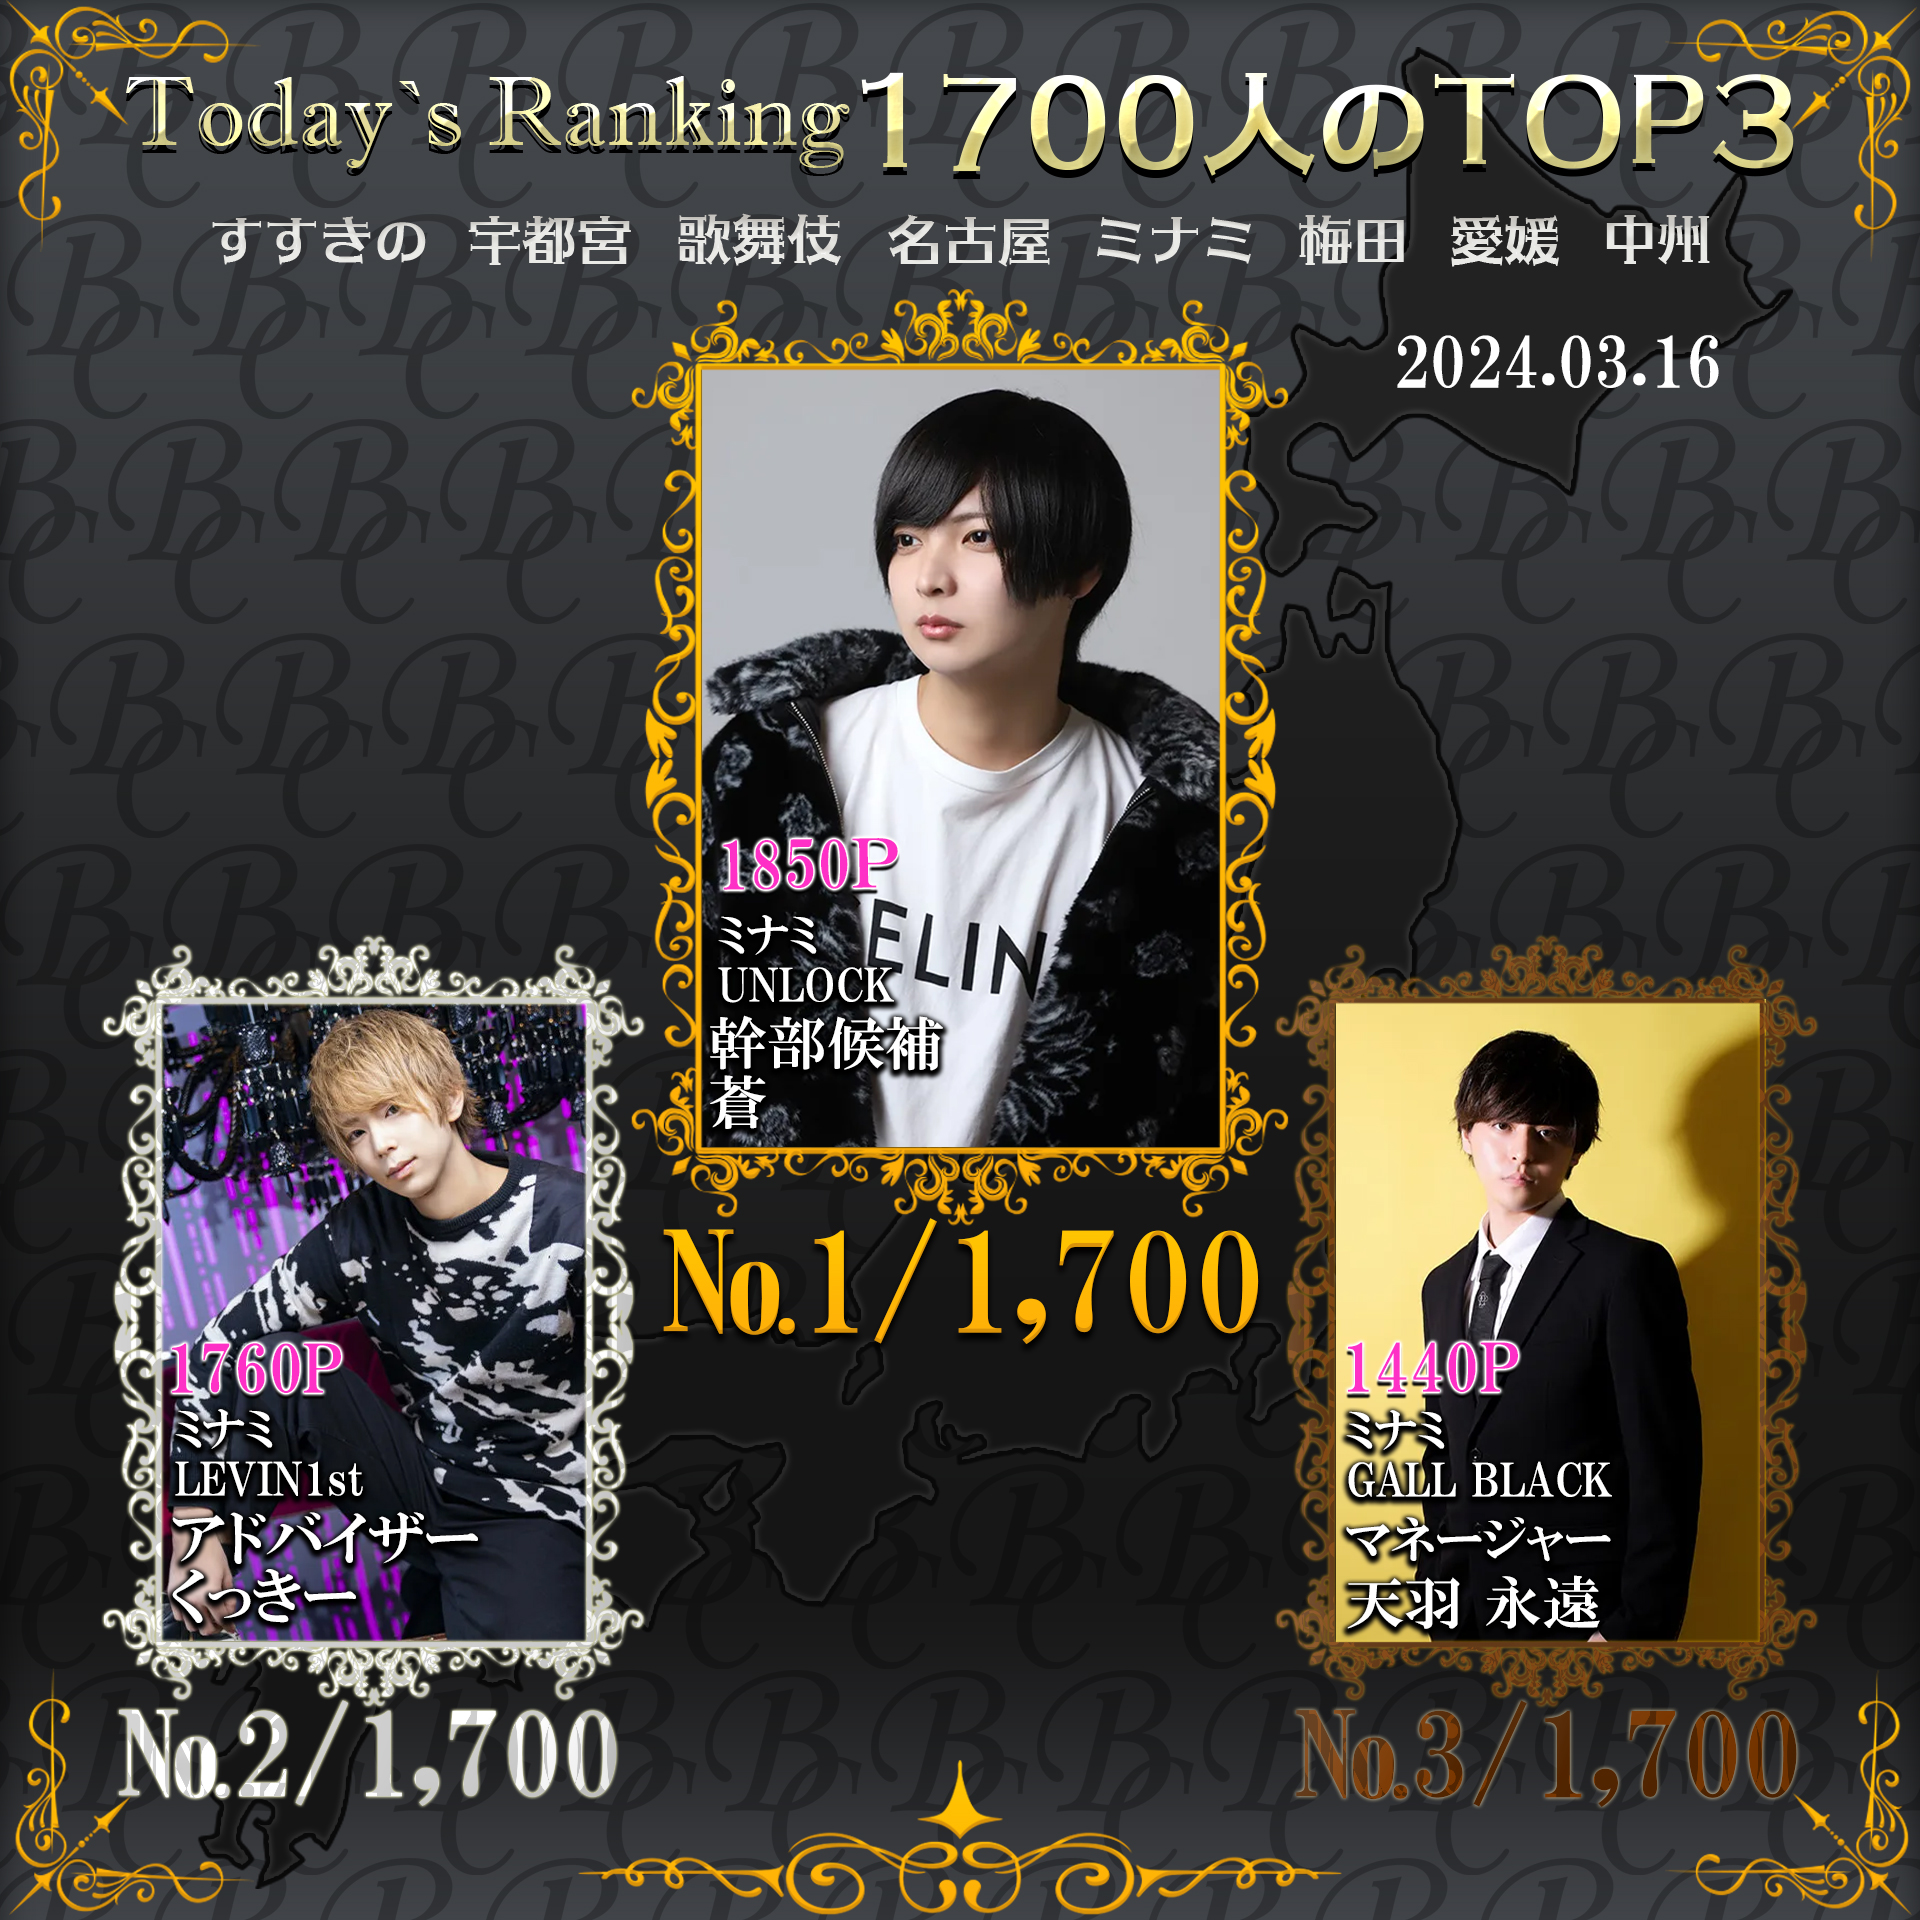 3/16 Today’s Ranking